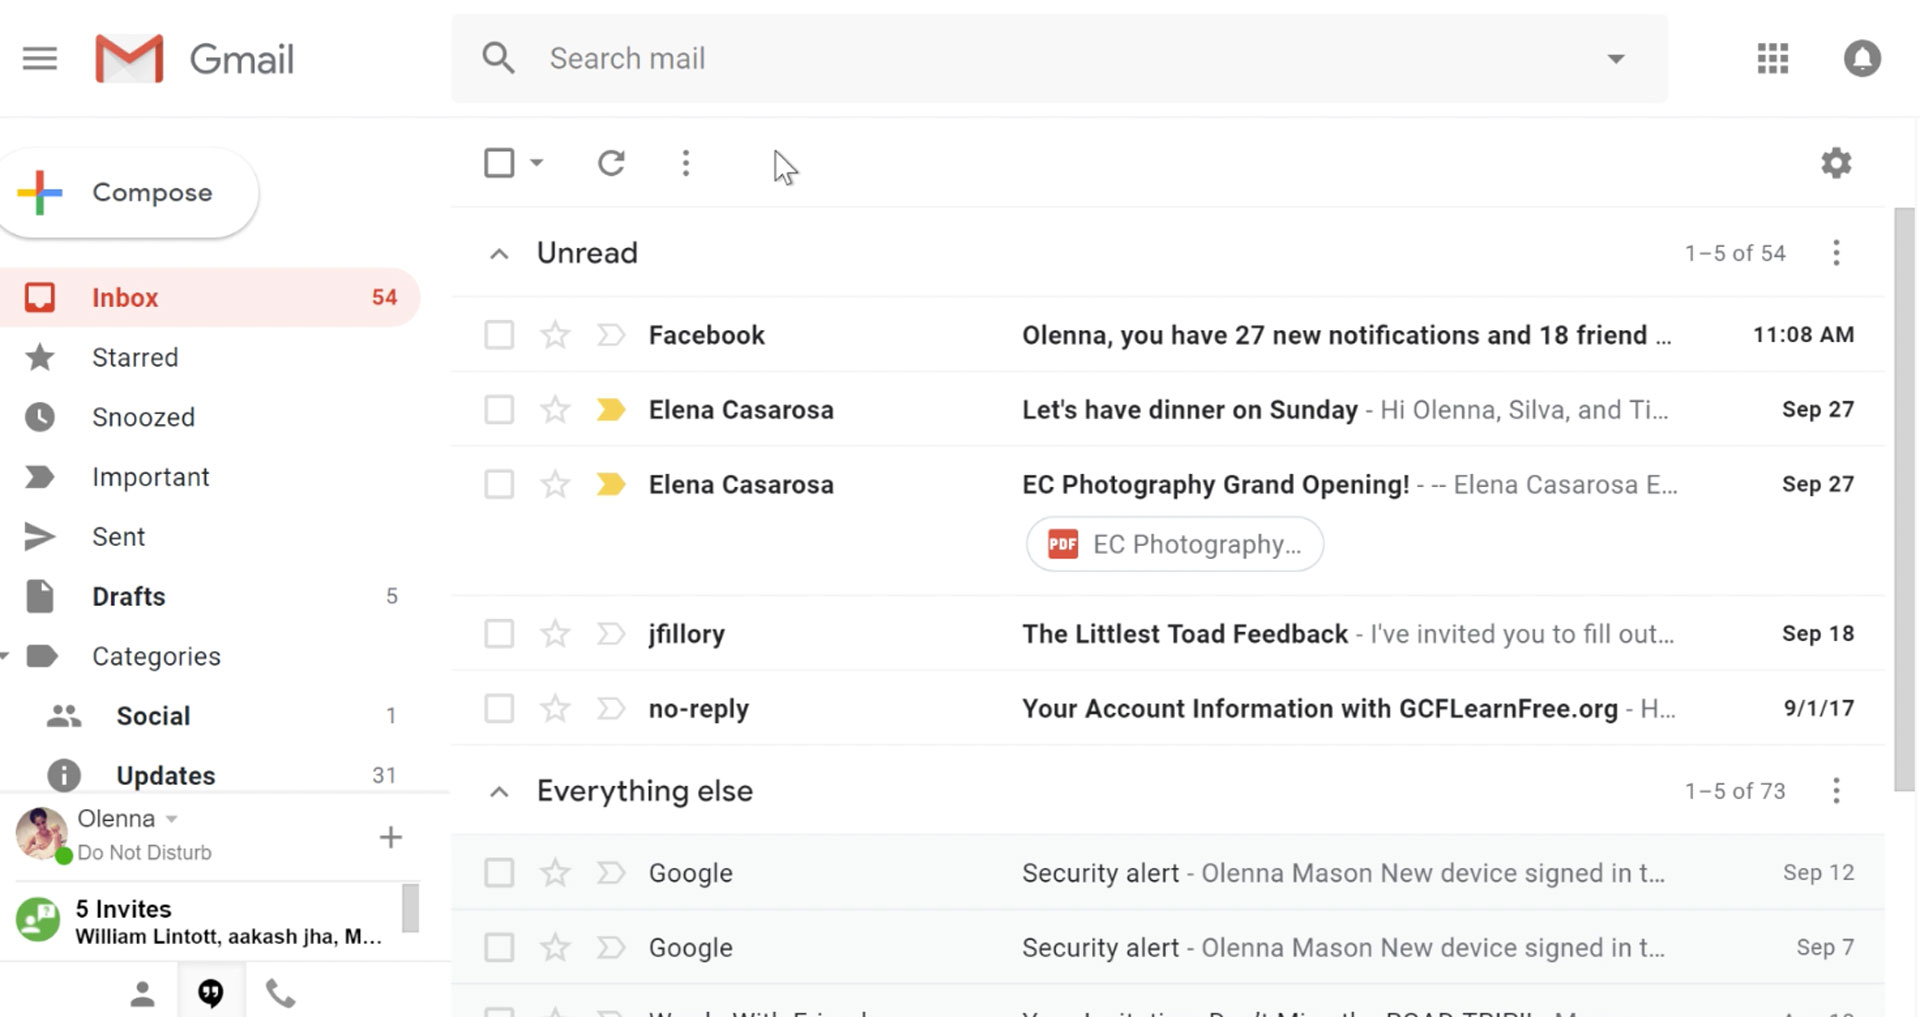 the Gmail inbox